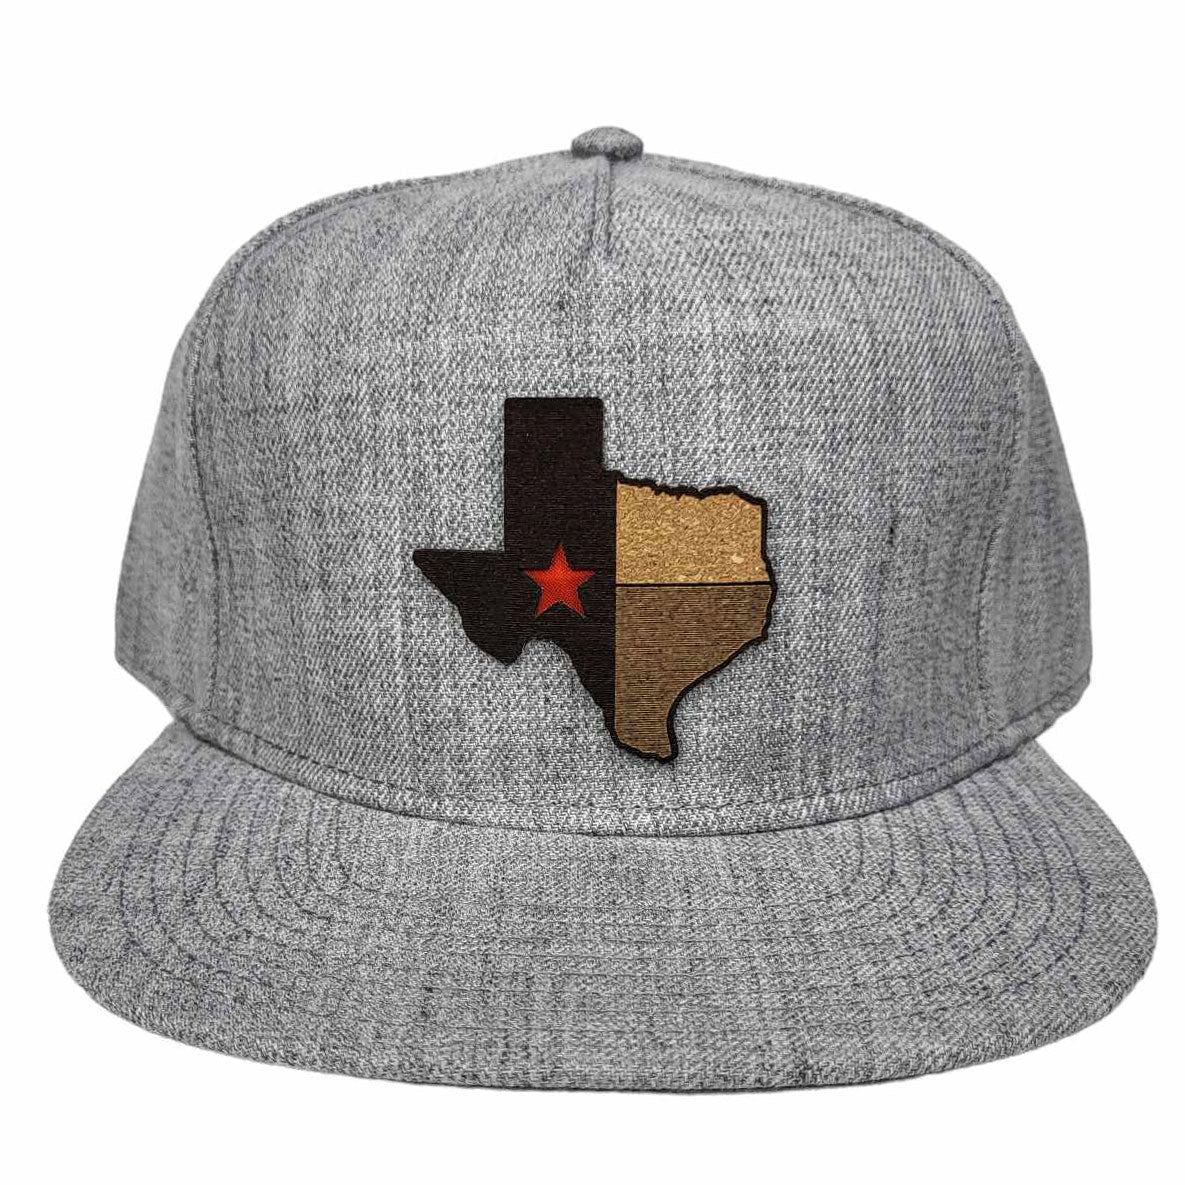 The Texan Hat